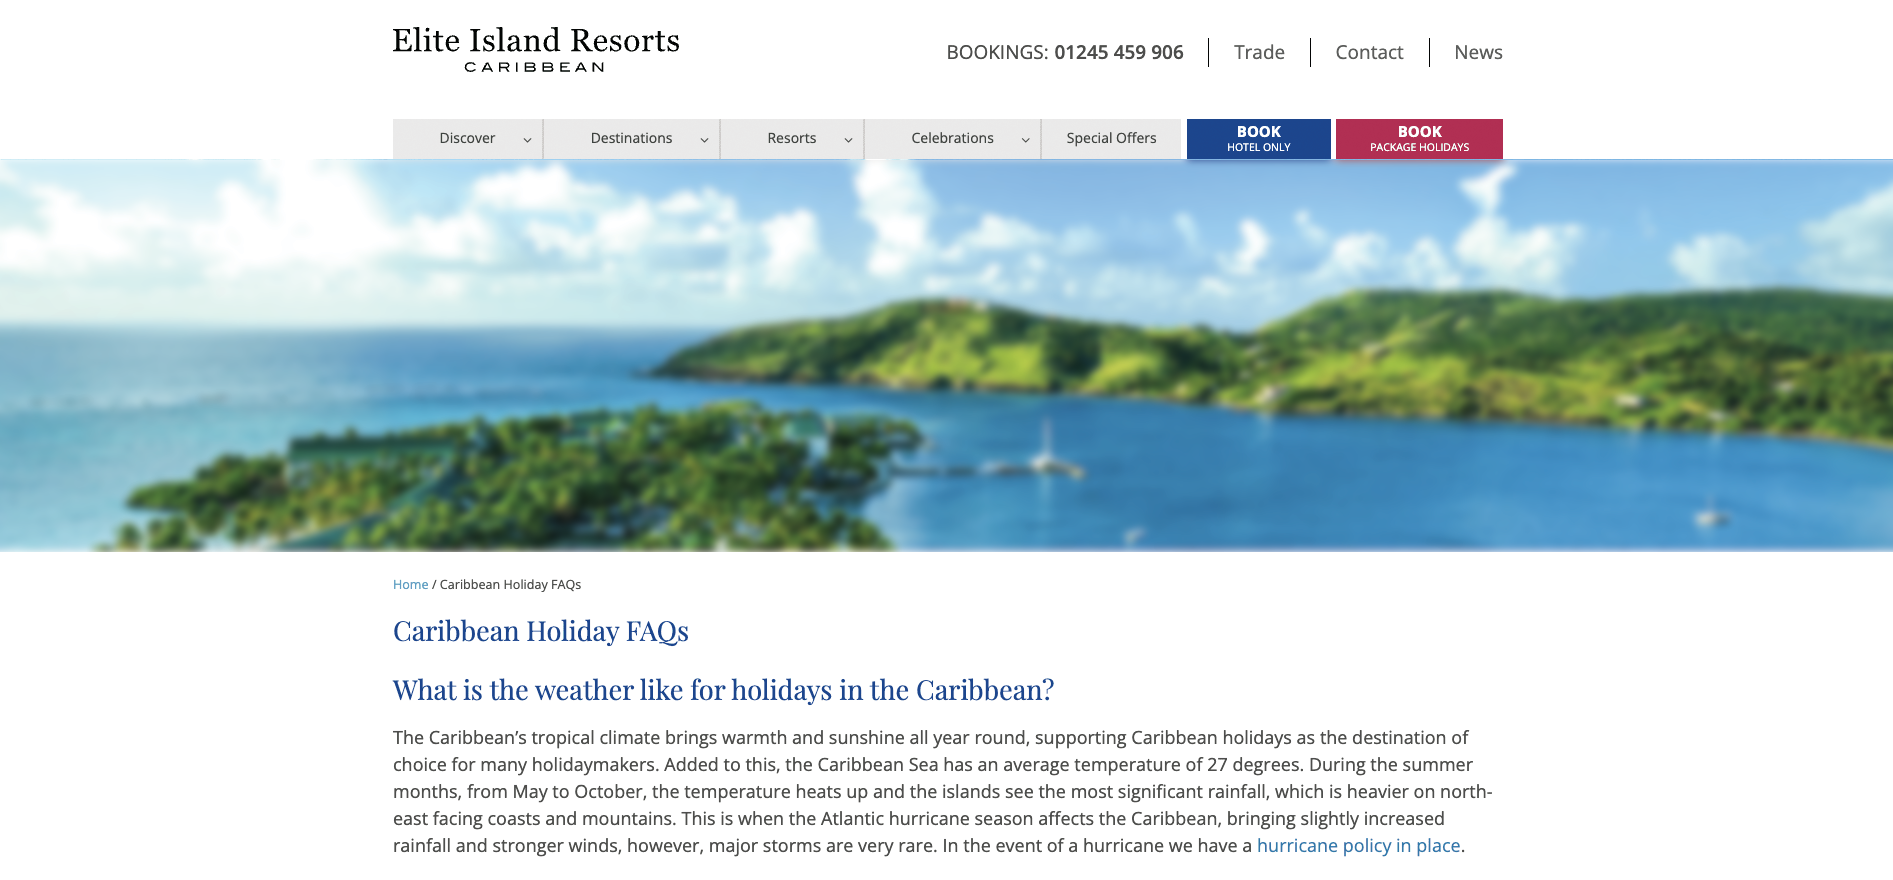 Elite Island Resorts FAQs